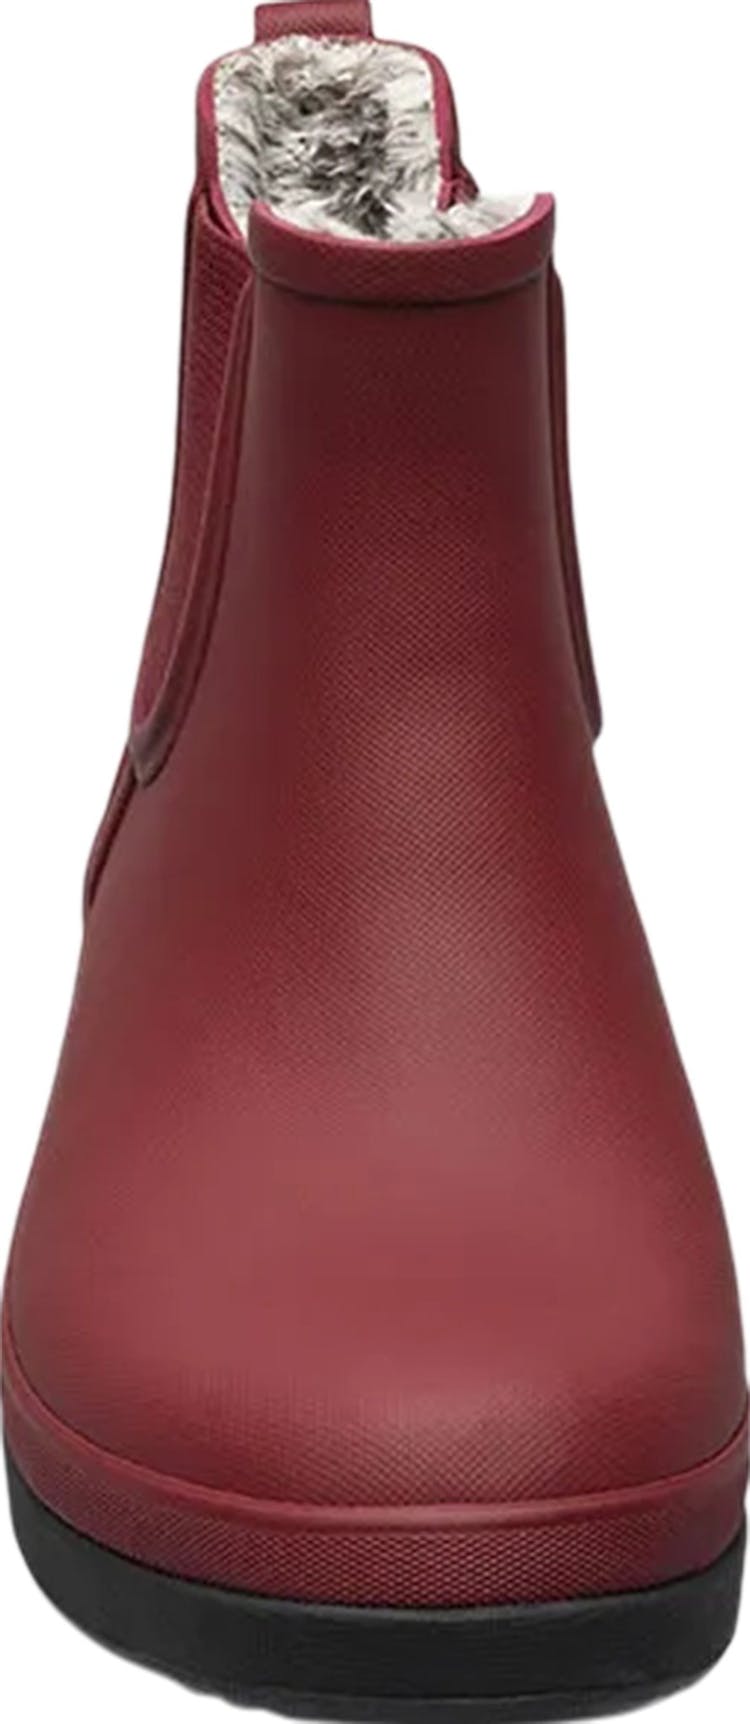 Product gallery image number 2 for product Amanda II Chelsea Waterproof Slip-On Rain Boots - Women's